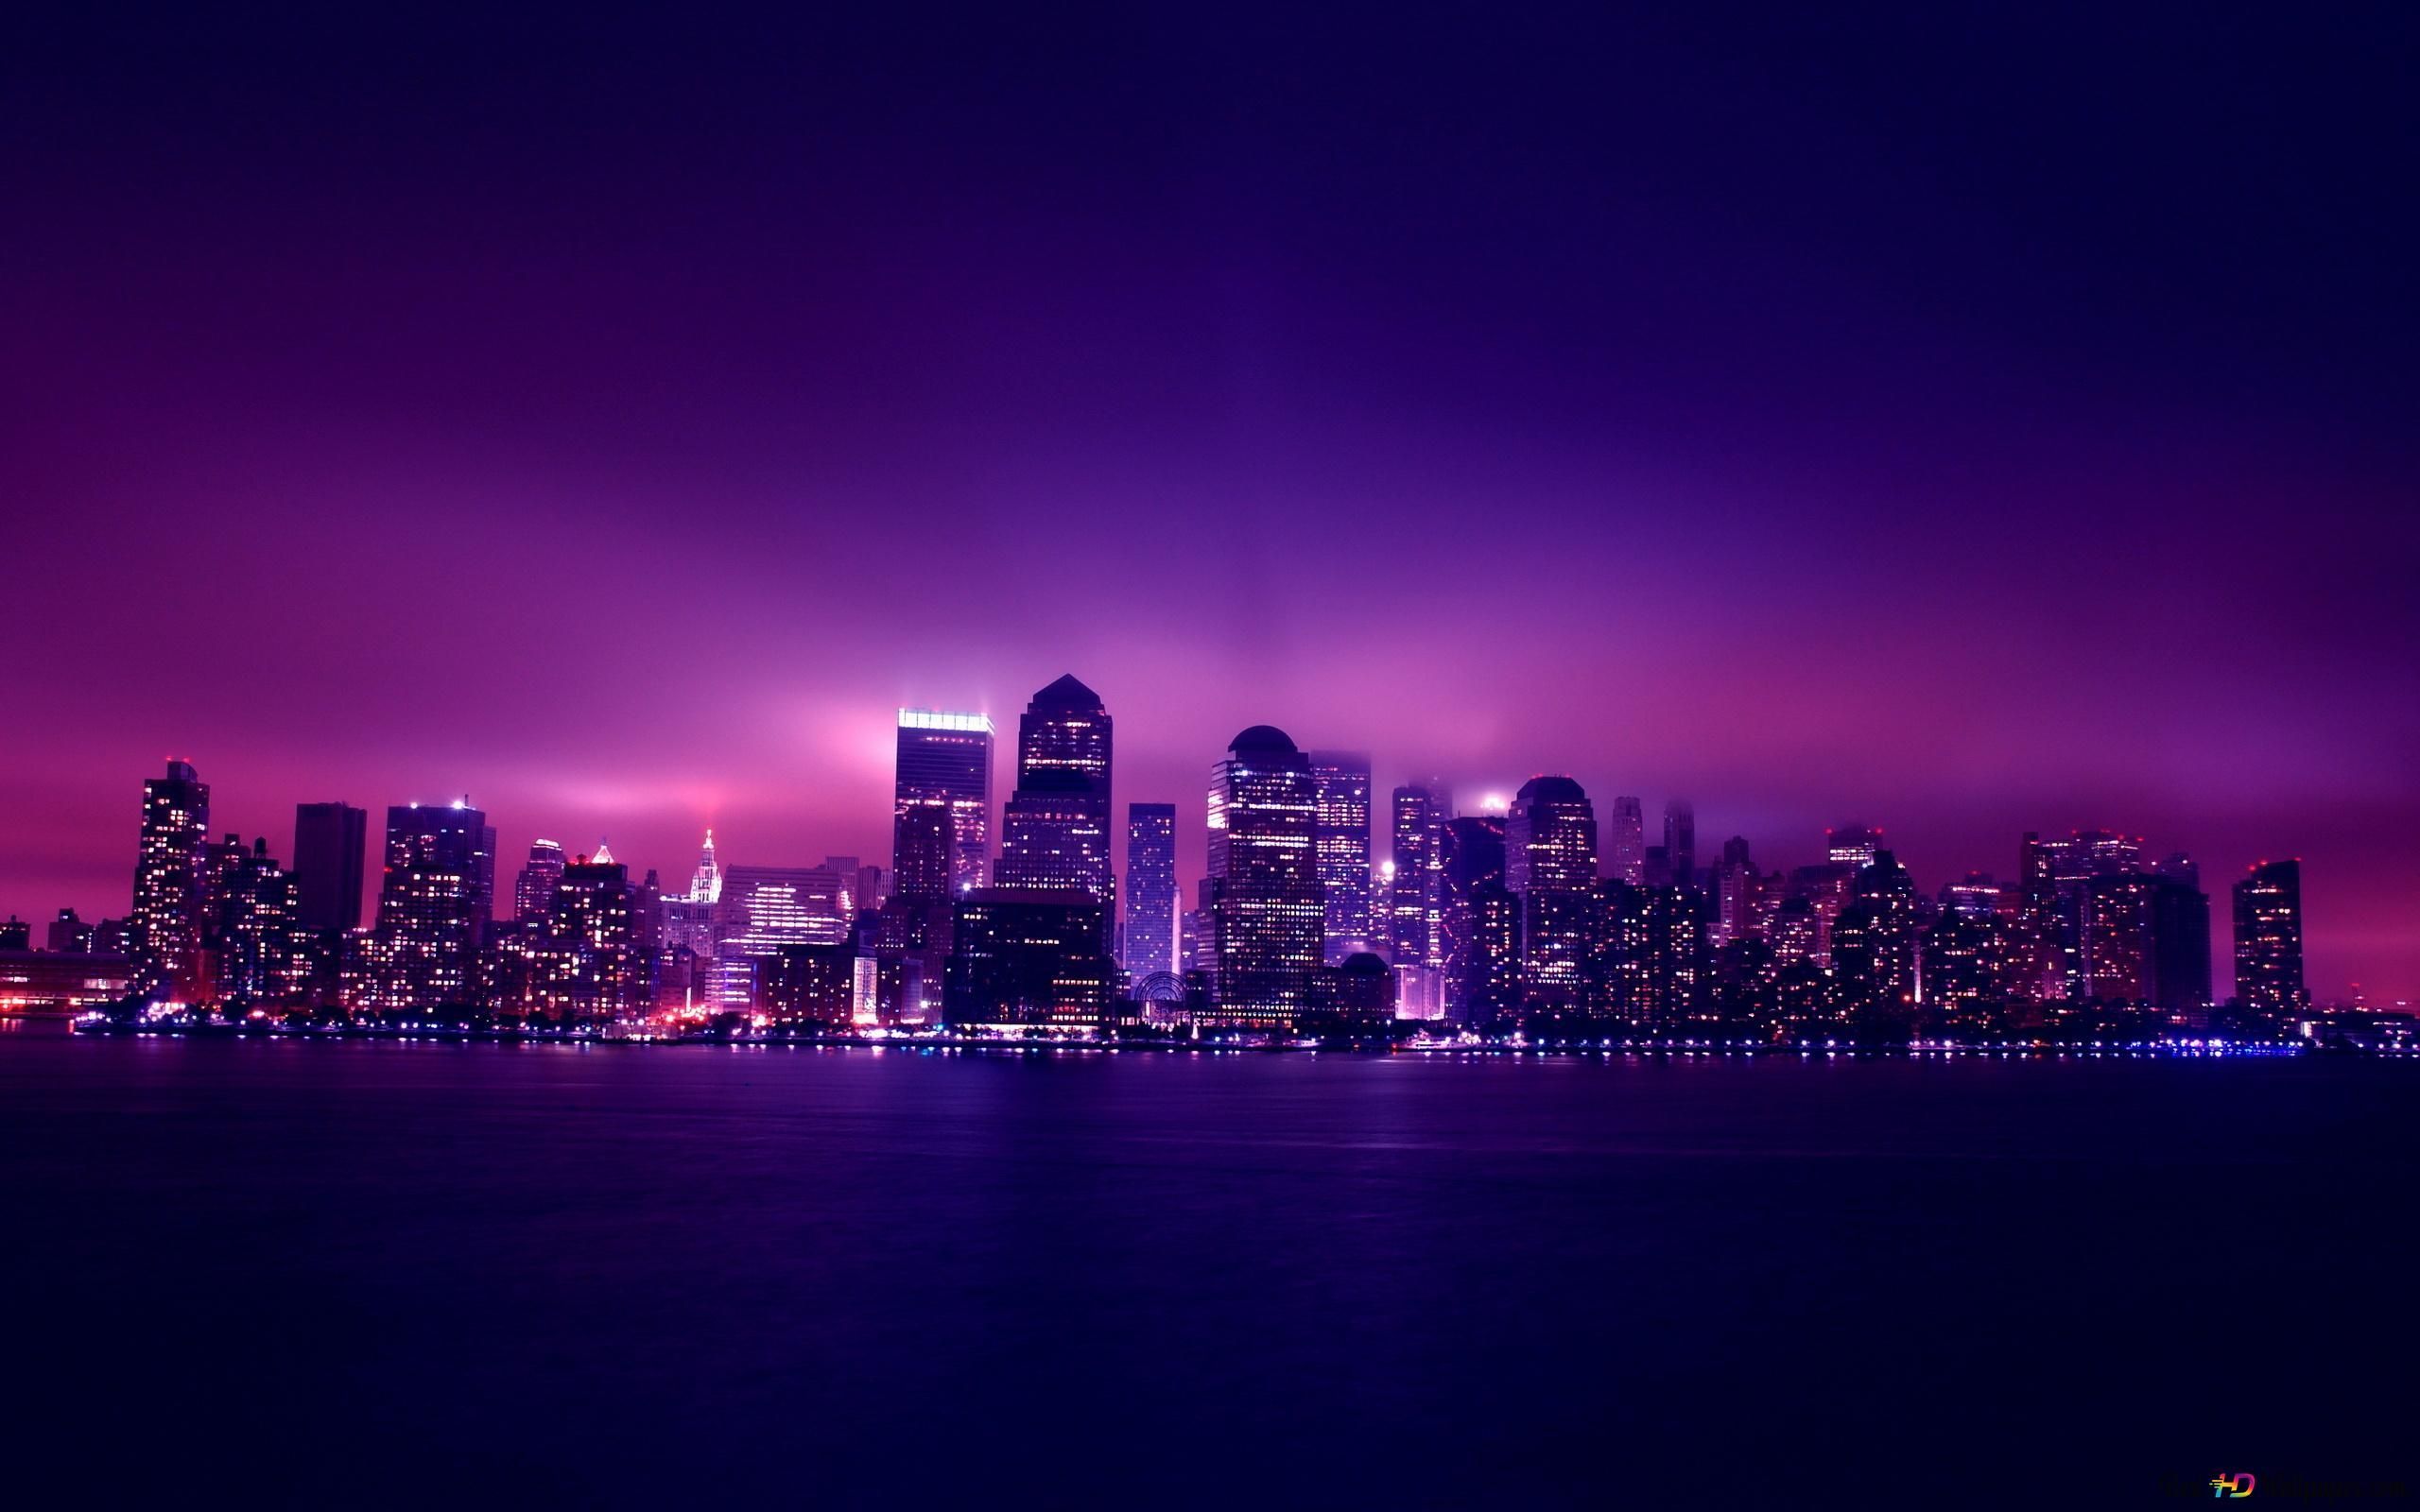 Aesthetic City Night Lights 2K wallpaper download